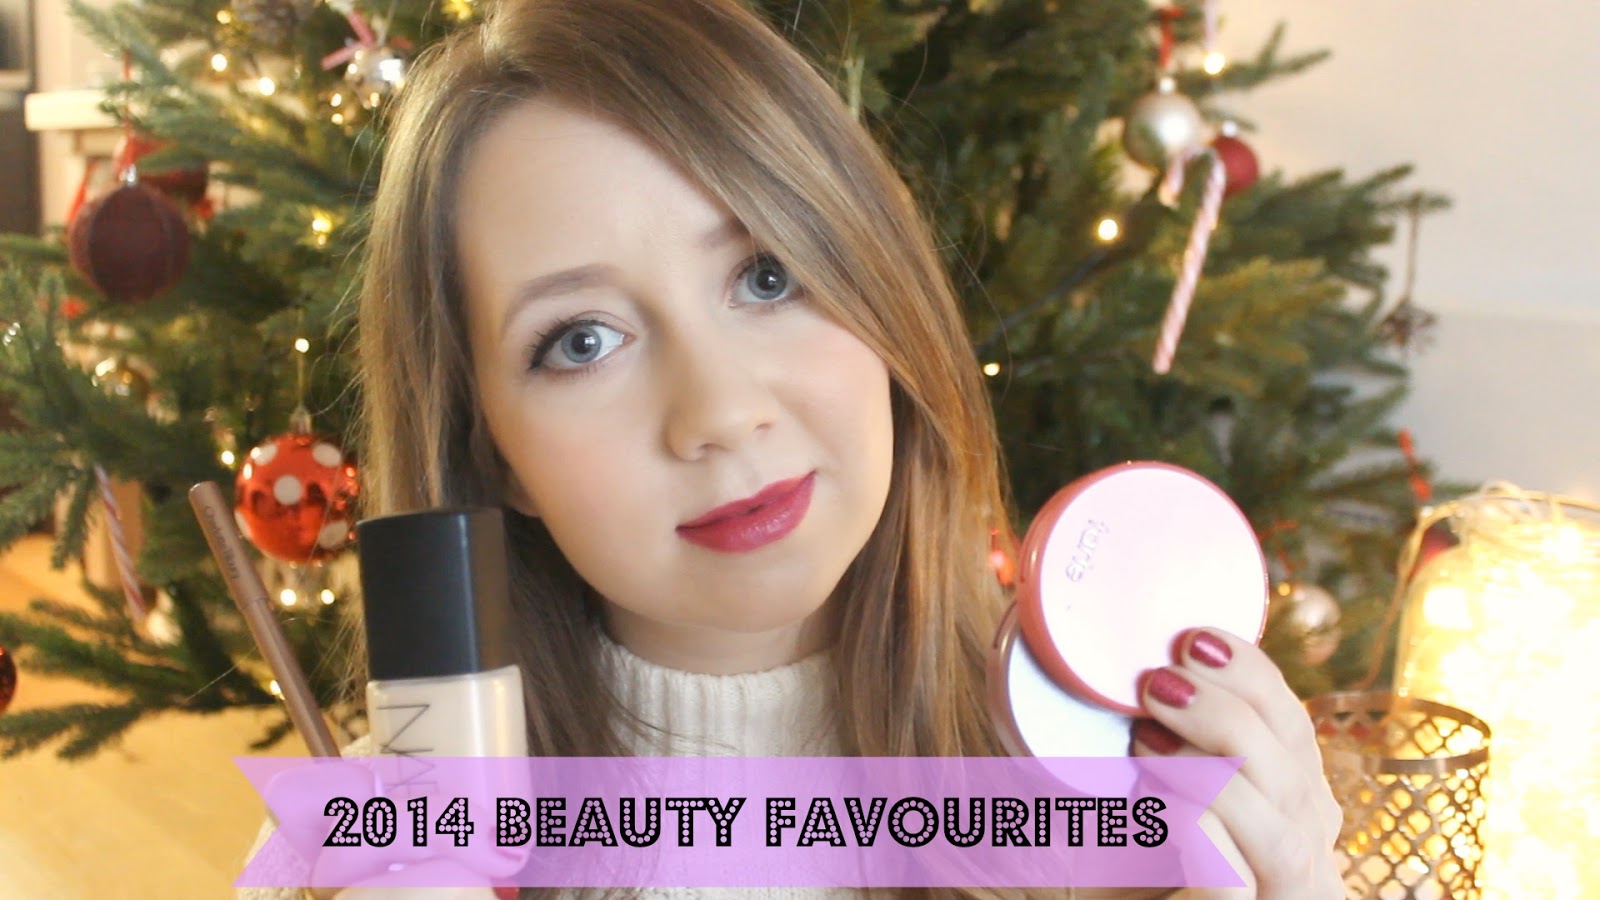 Video: 2014 Beauty Favourites